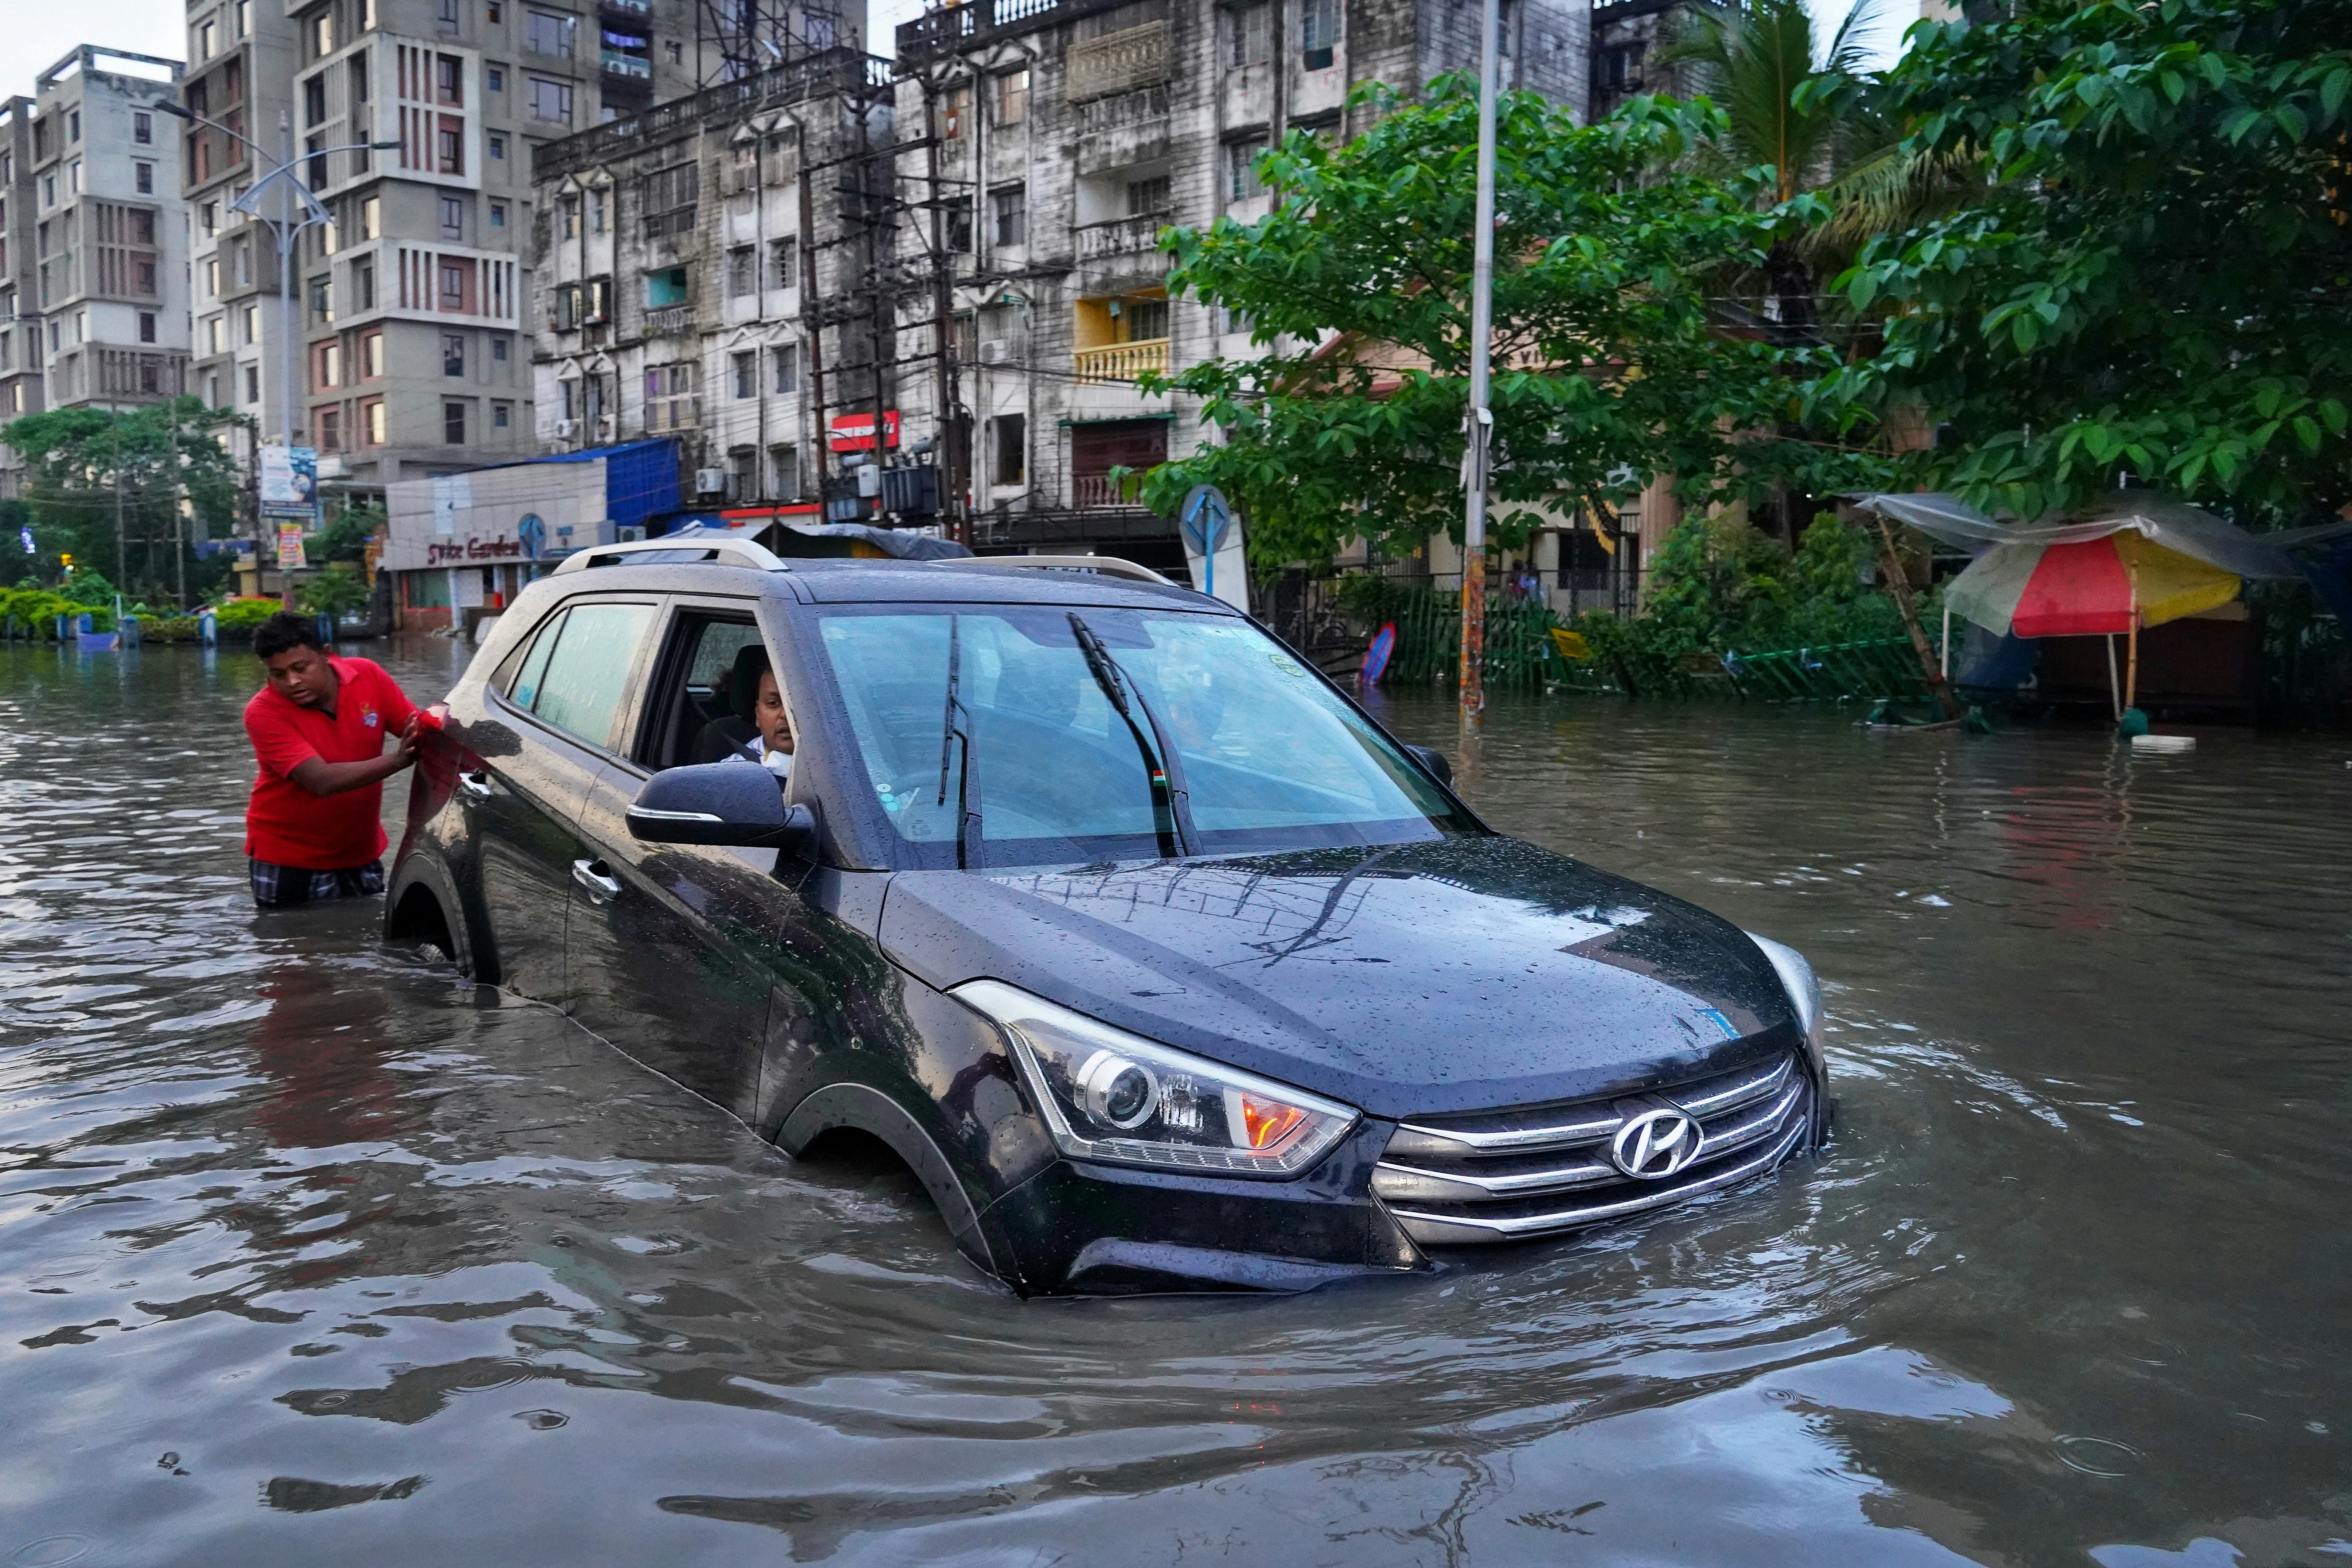 Mumbai’s myriad waterways make the city of 21 million especially prone to floods during monsoon season. : Dibakar Roy via Unsplash CCBY4.0